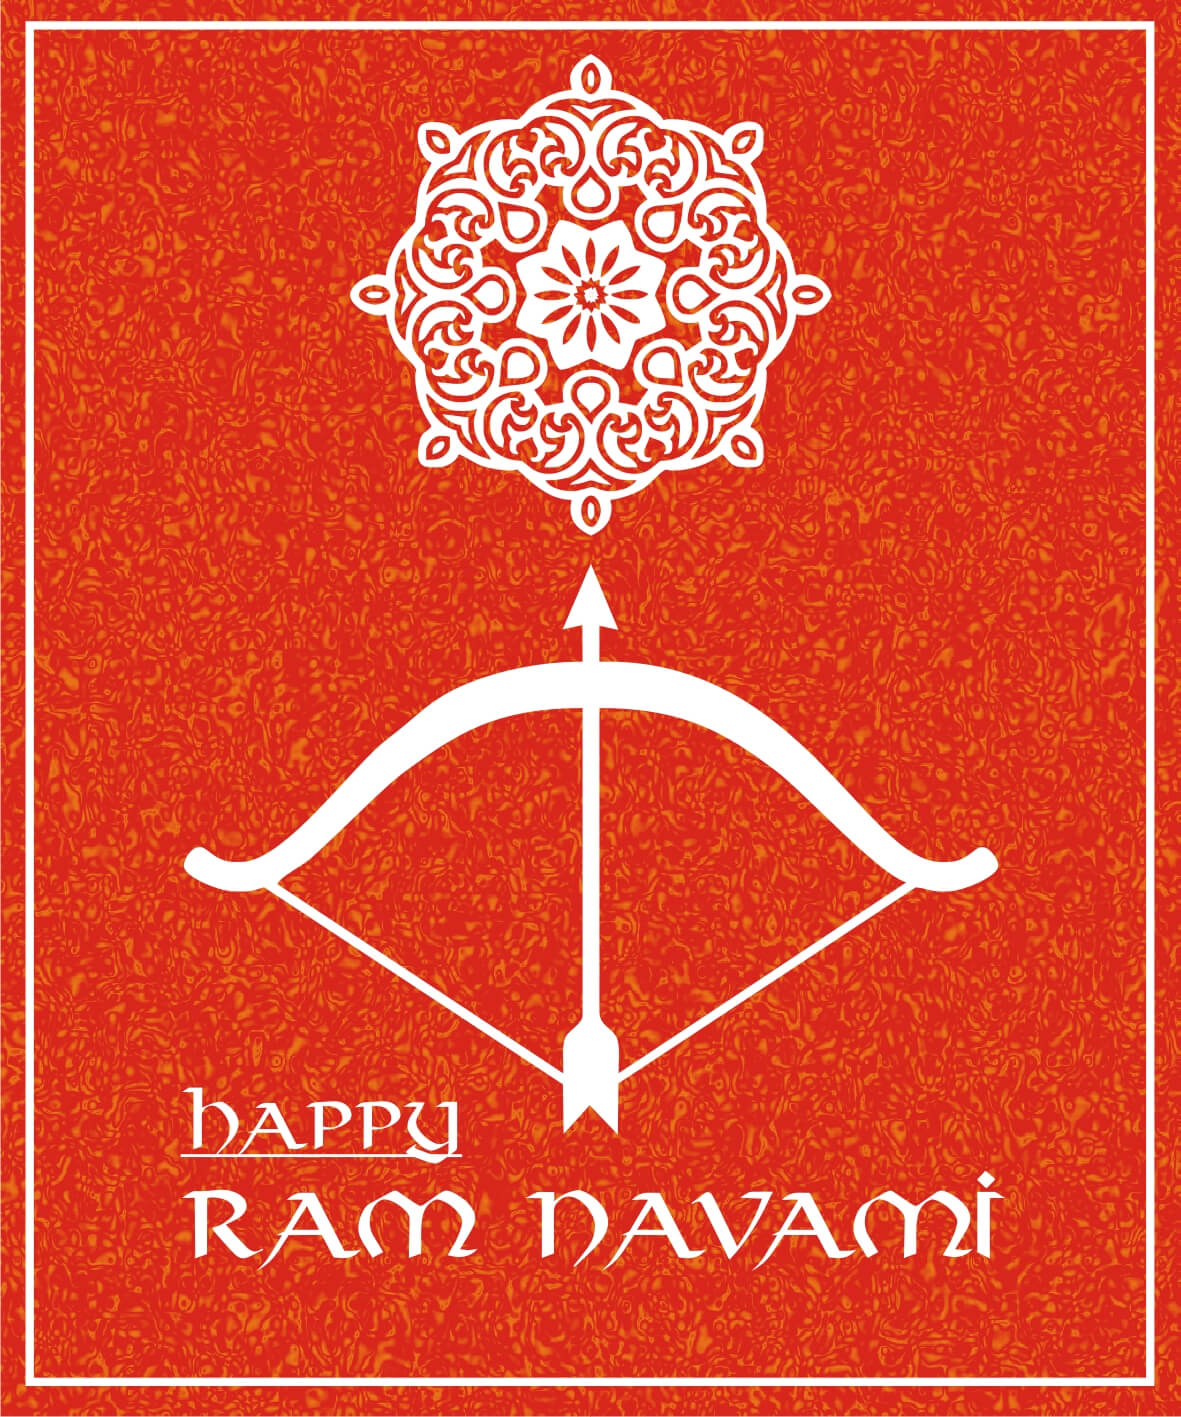 Ram Navami | eGreetings Portal